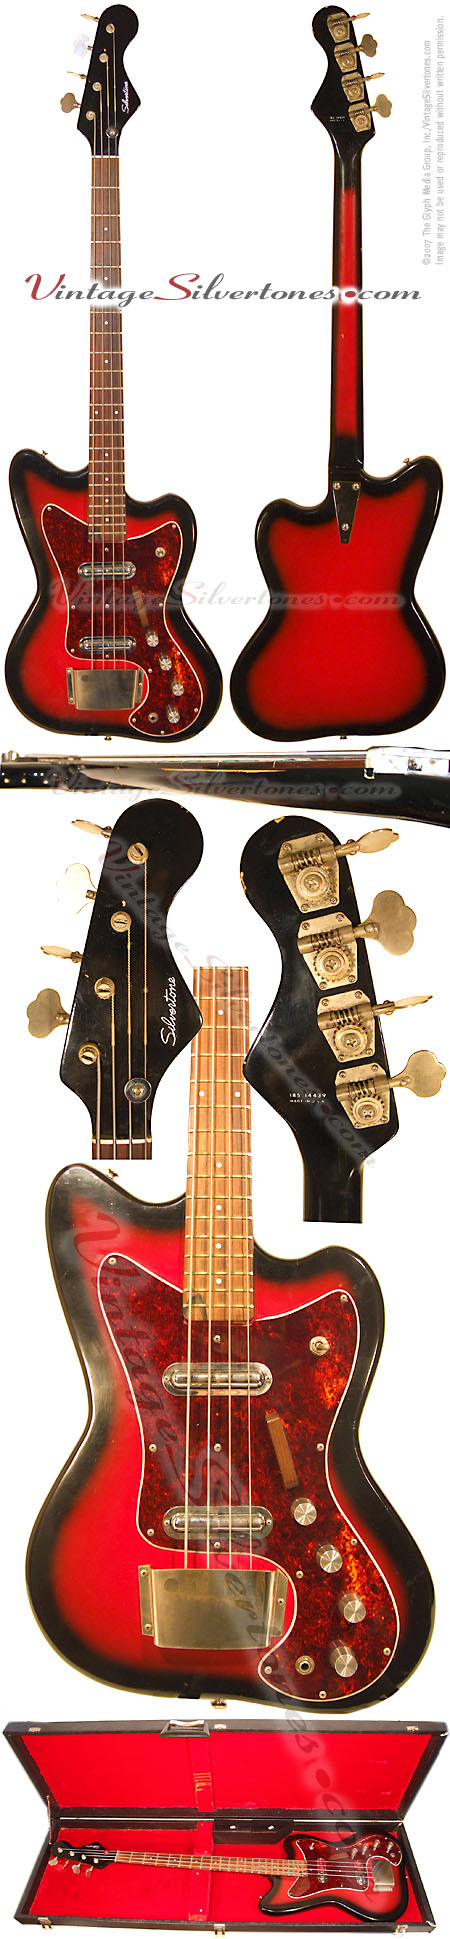 Silvertone 1443 electric bass guitar made by Danelectro of Neptune New Jersey, two pickup, solid body, black, masonite body, 2 lipstick pickups, circa 1967